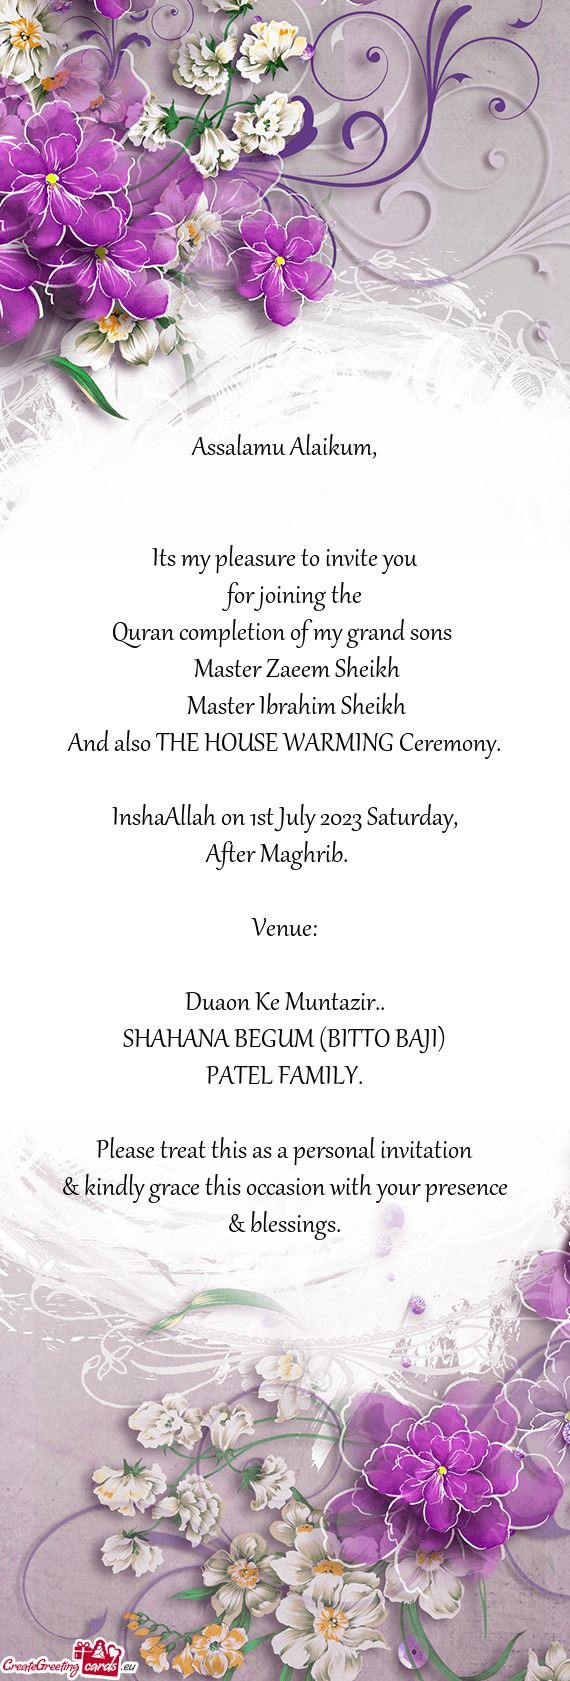 Its my pleasure to invite you